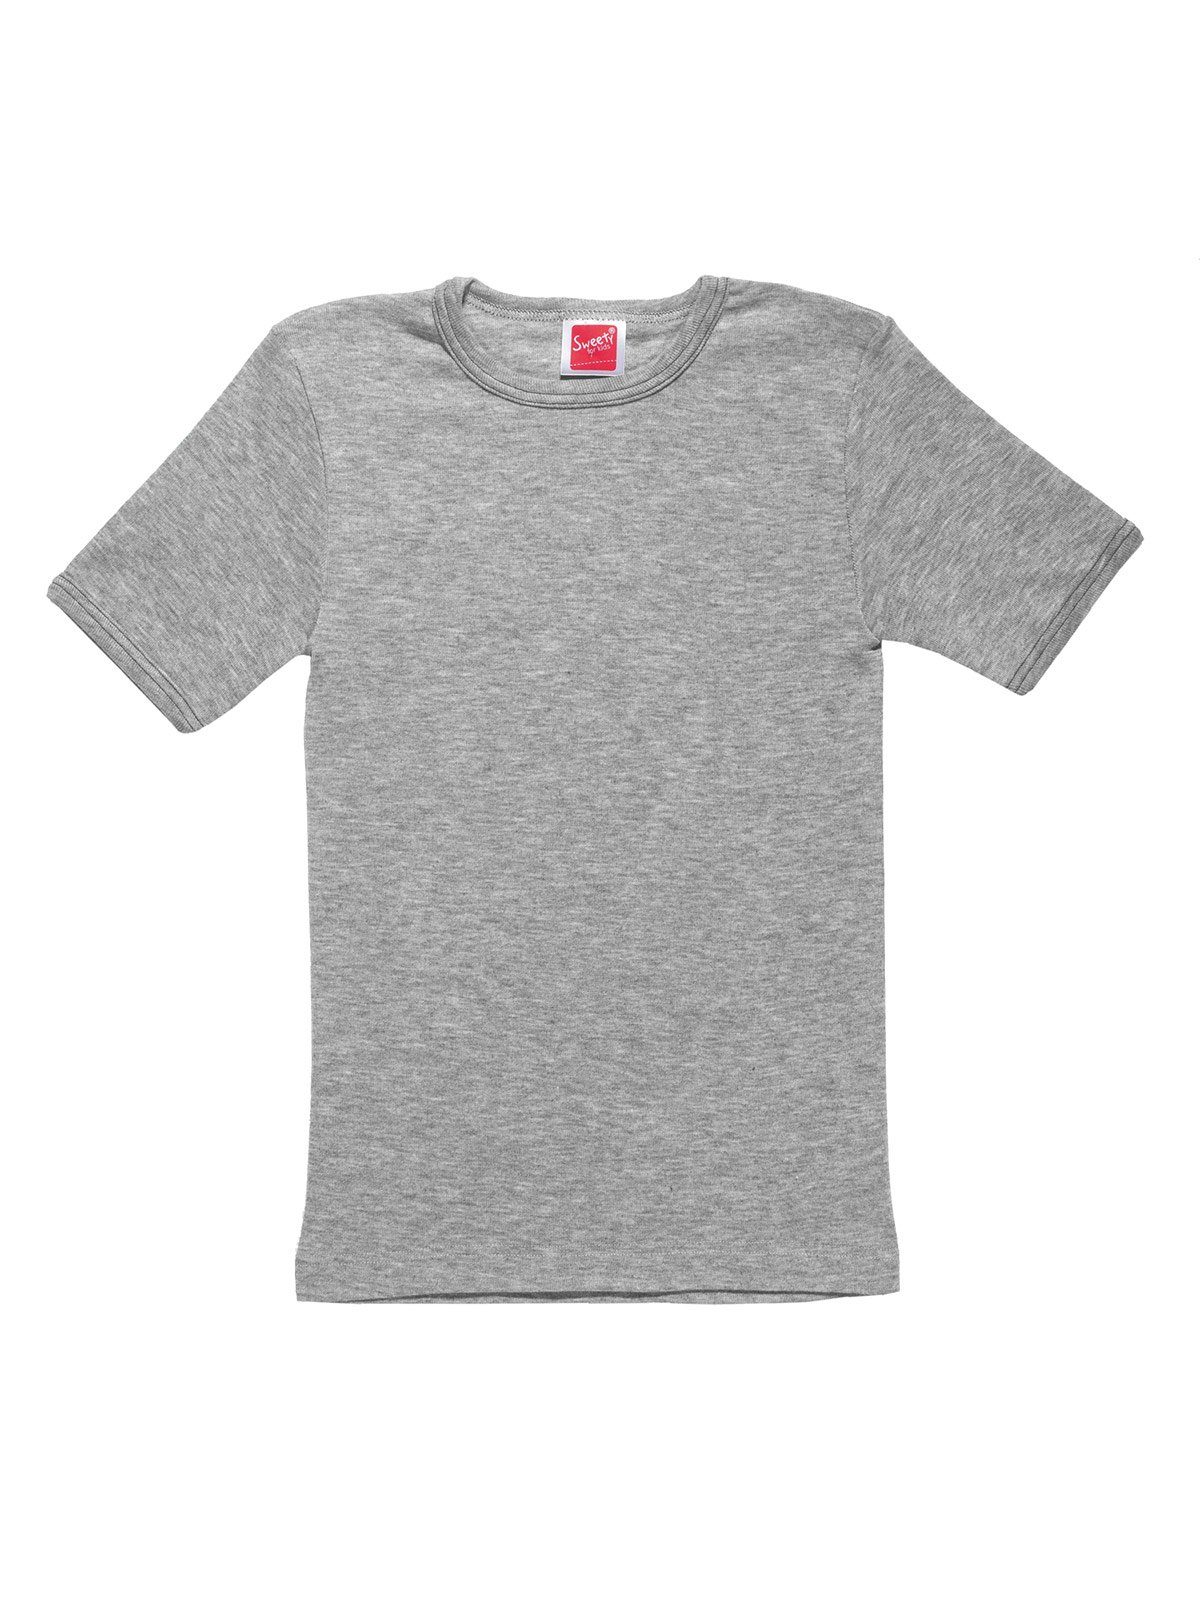 hohe Kids for Shirt Markenqualität (Spar-Set, Sweety 2er Achselhemd Sparpack Funktionswäsche Kinder 2-St)